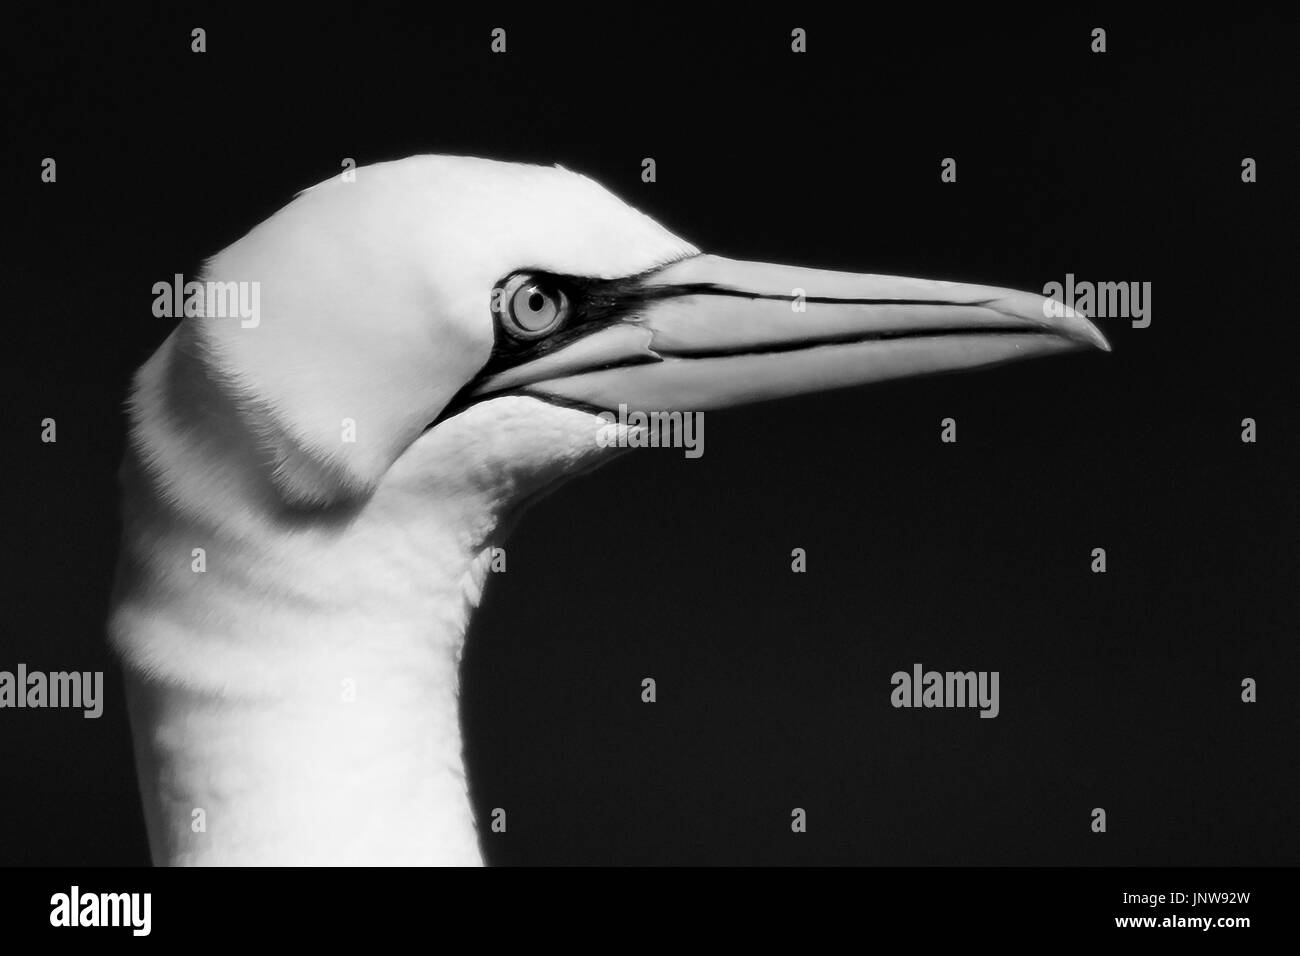 Disparo a la cabeza de un ave marina Gannett Foto de stock